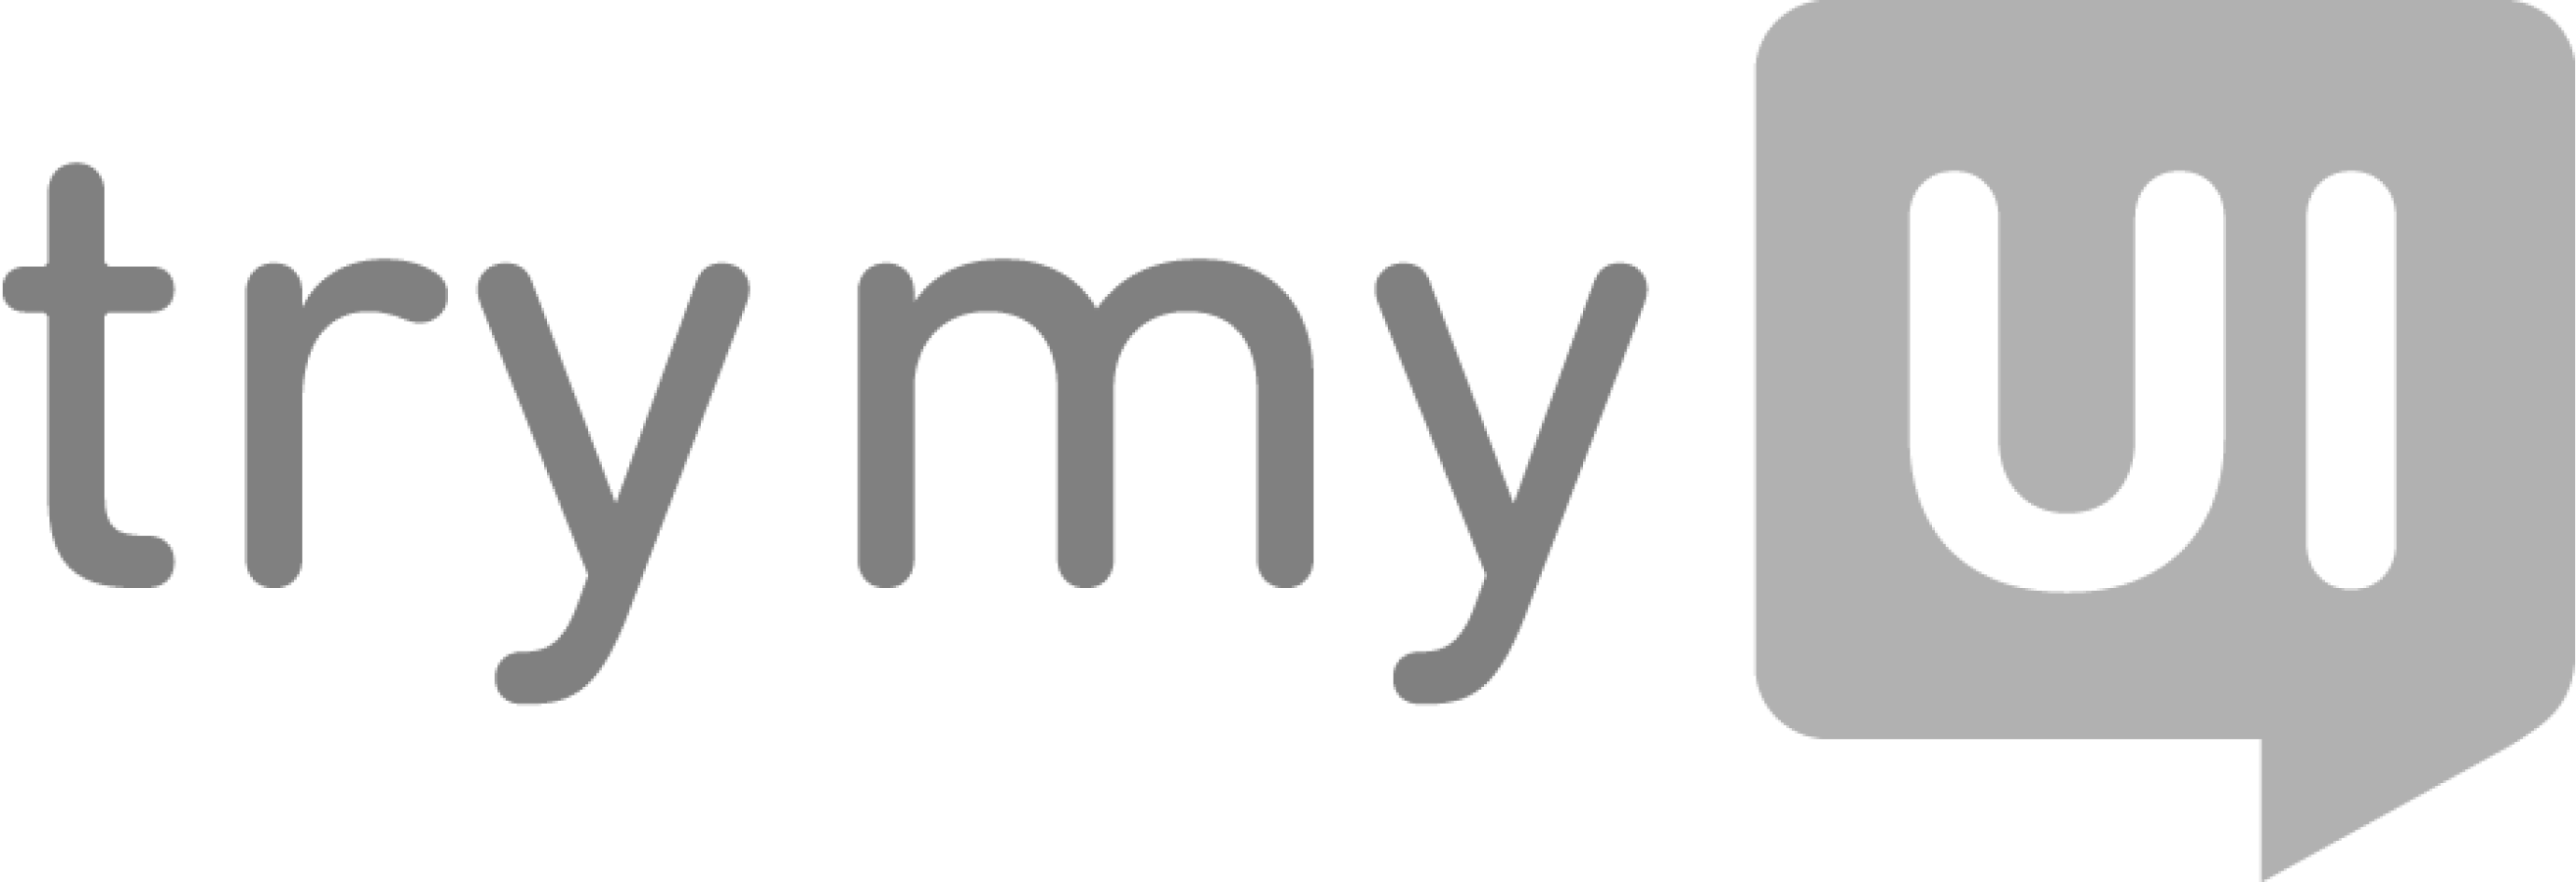 try_my_ui_logo-image